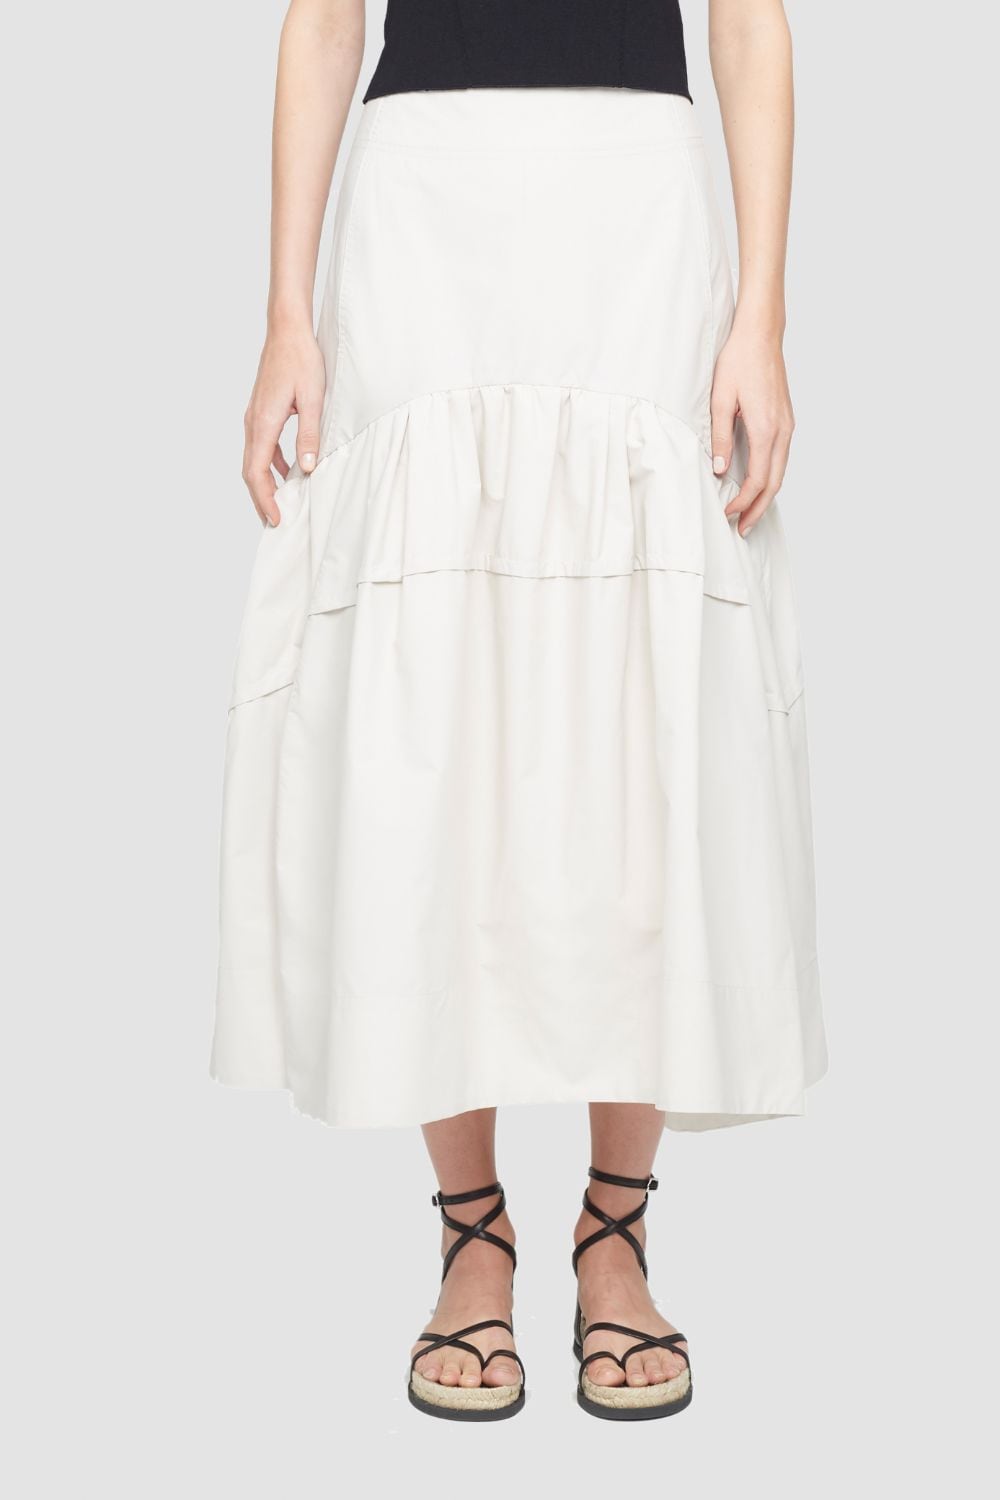 Shirred Midi Skirt in white | 3.1 Phillip Lim Official Site